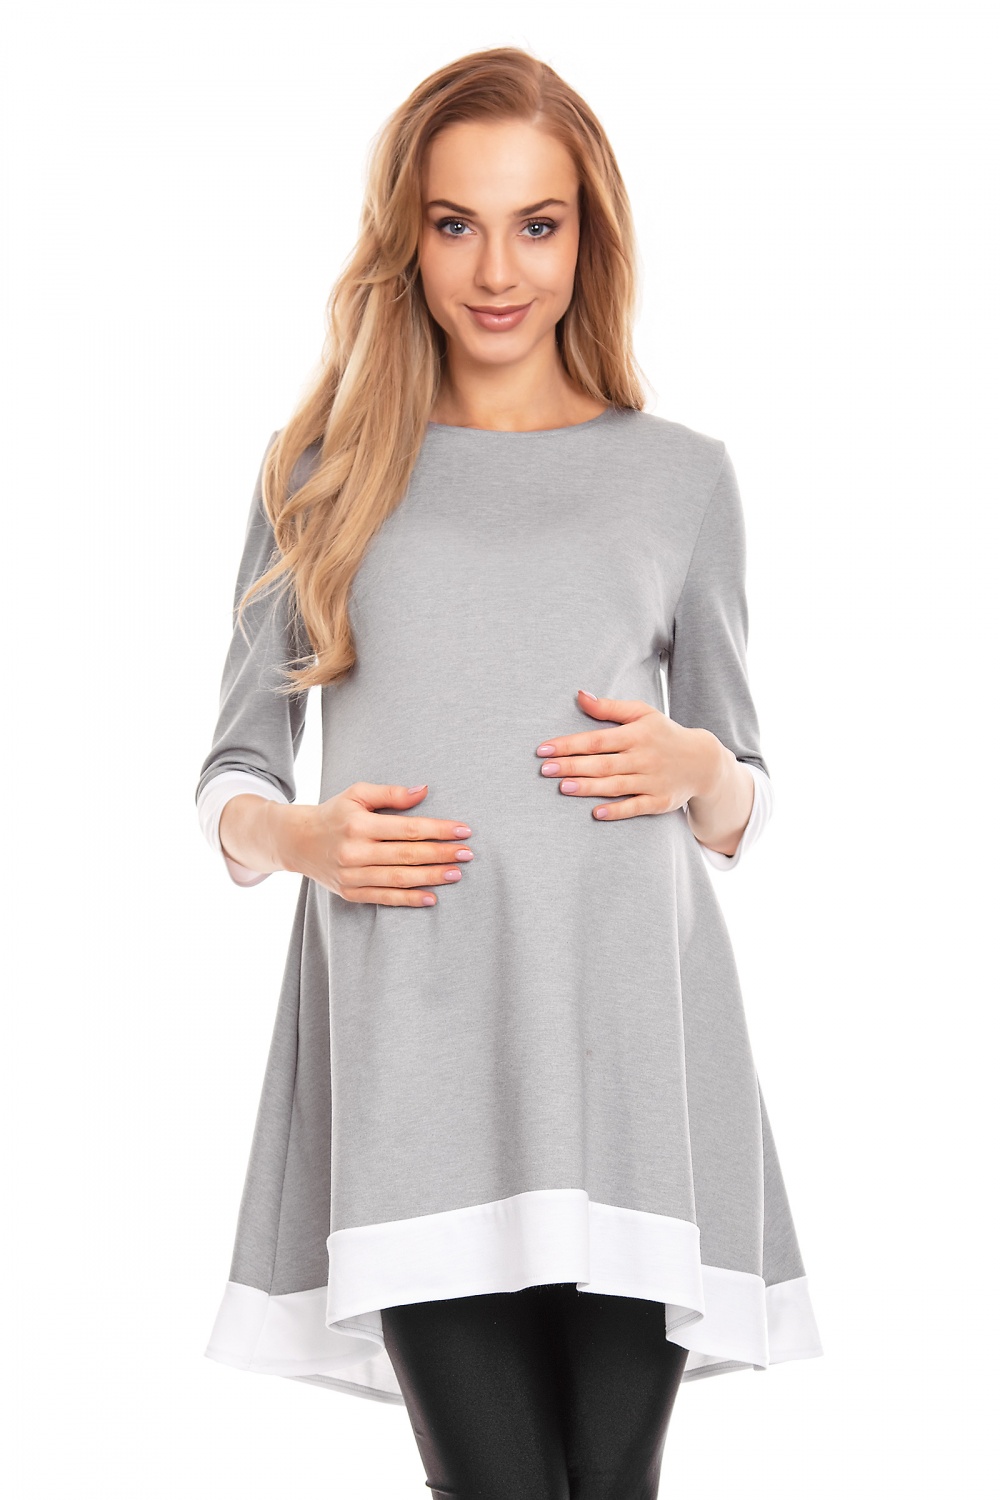 Pregnancy dress model 132028 P..